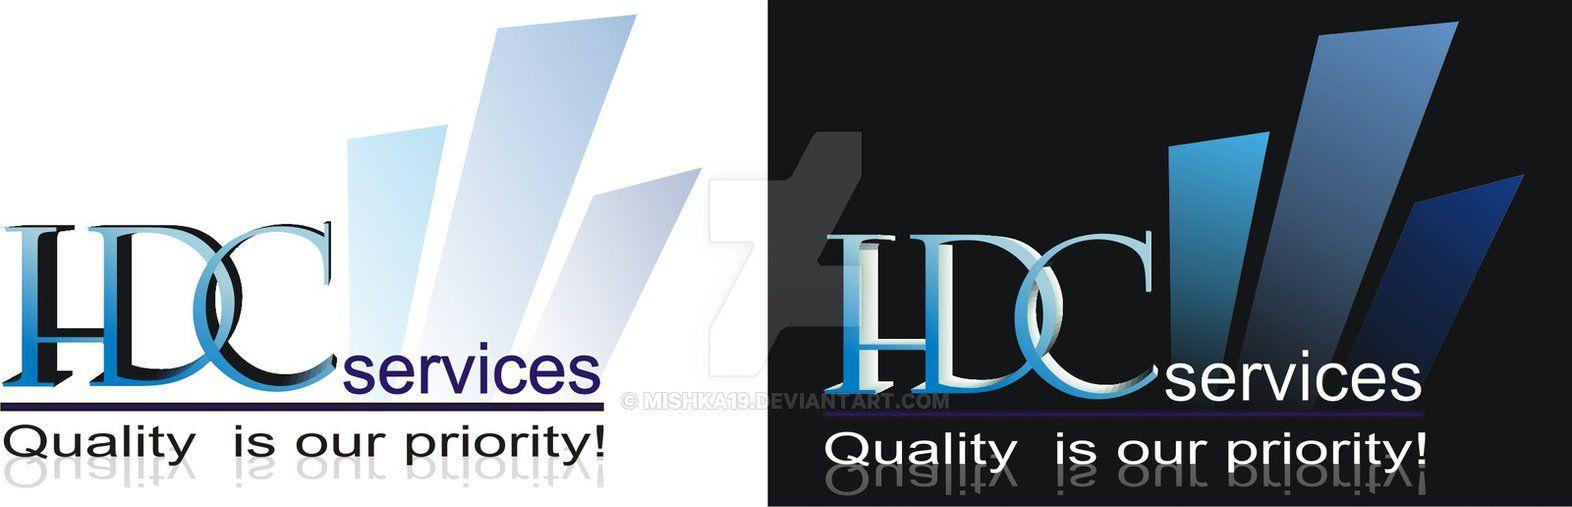 HDC Logo - HDC logo by mishka19 on DeviantArt